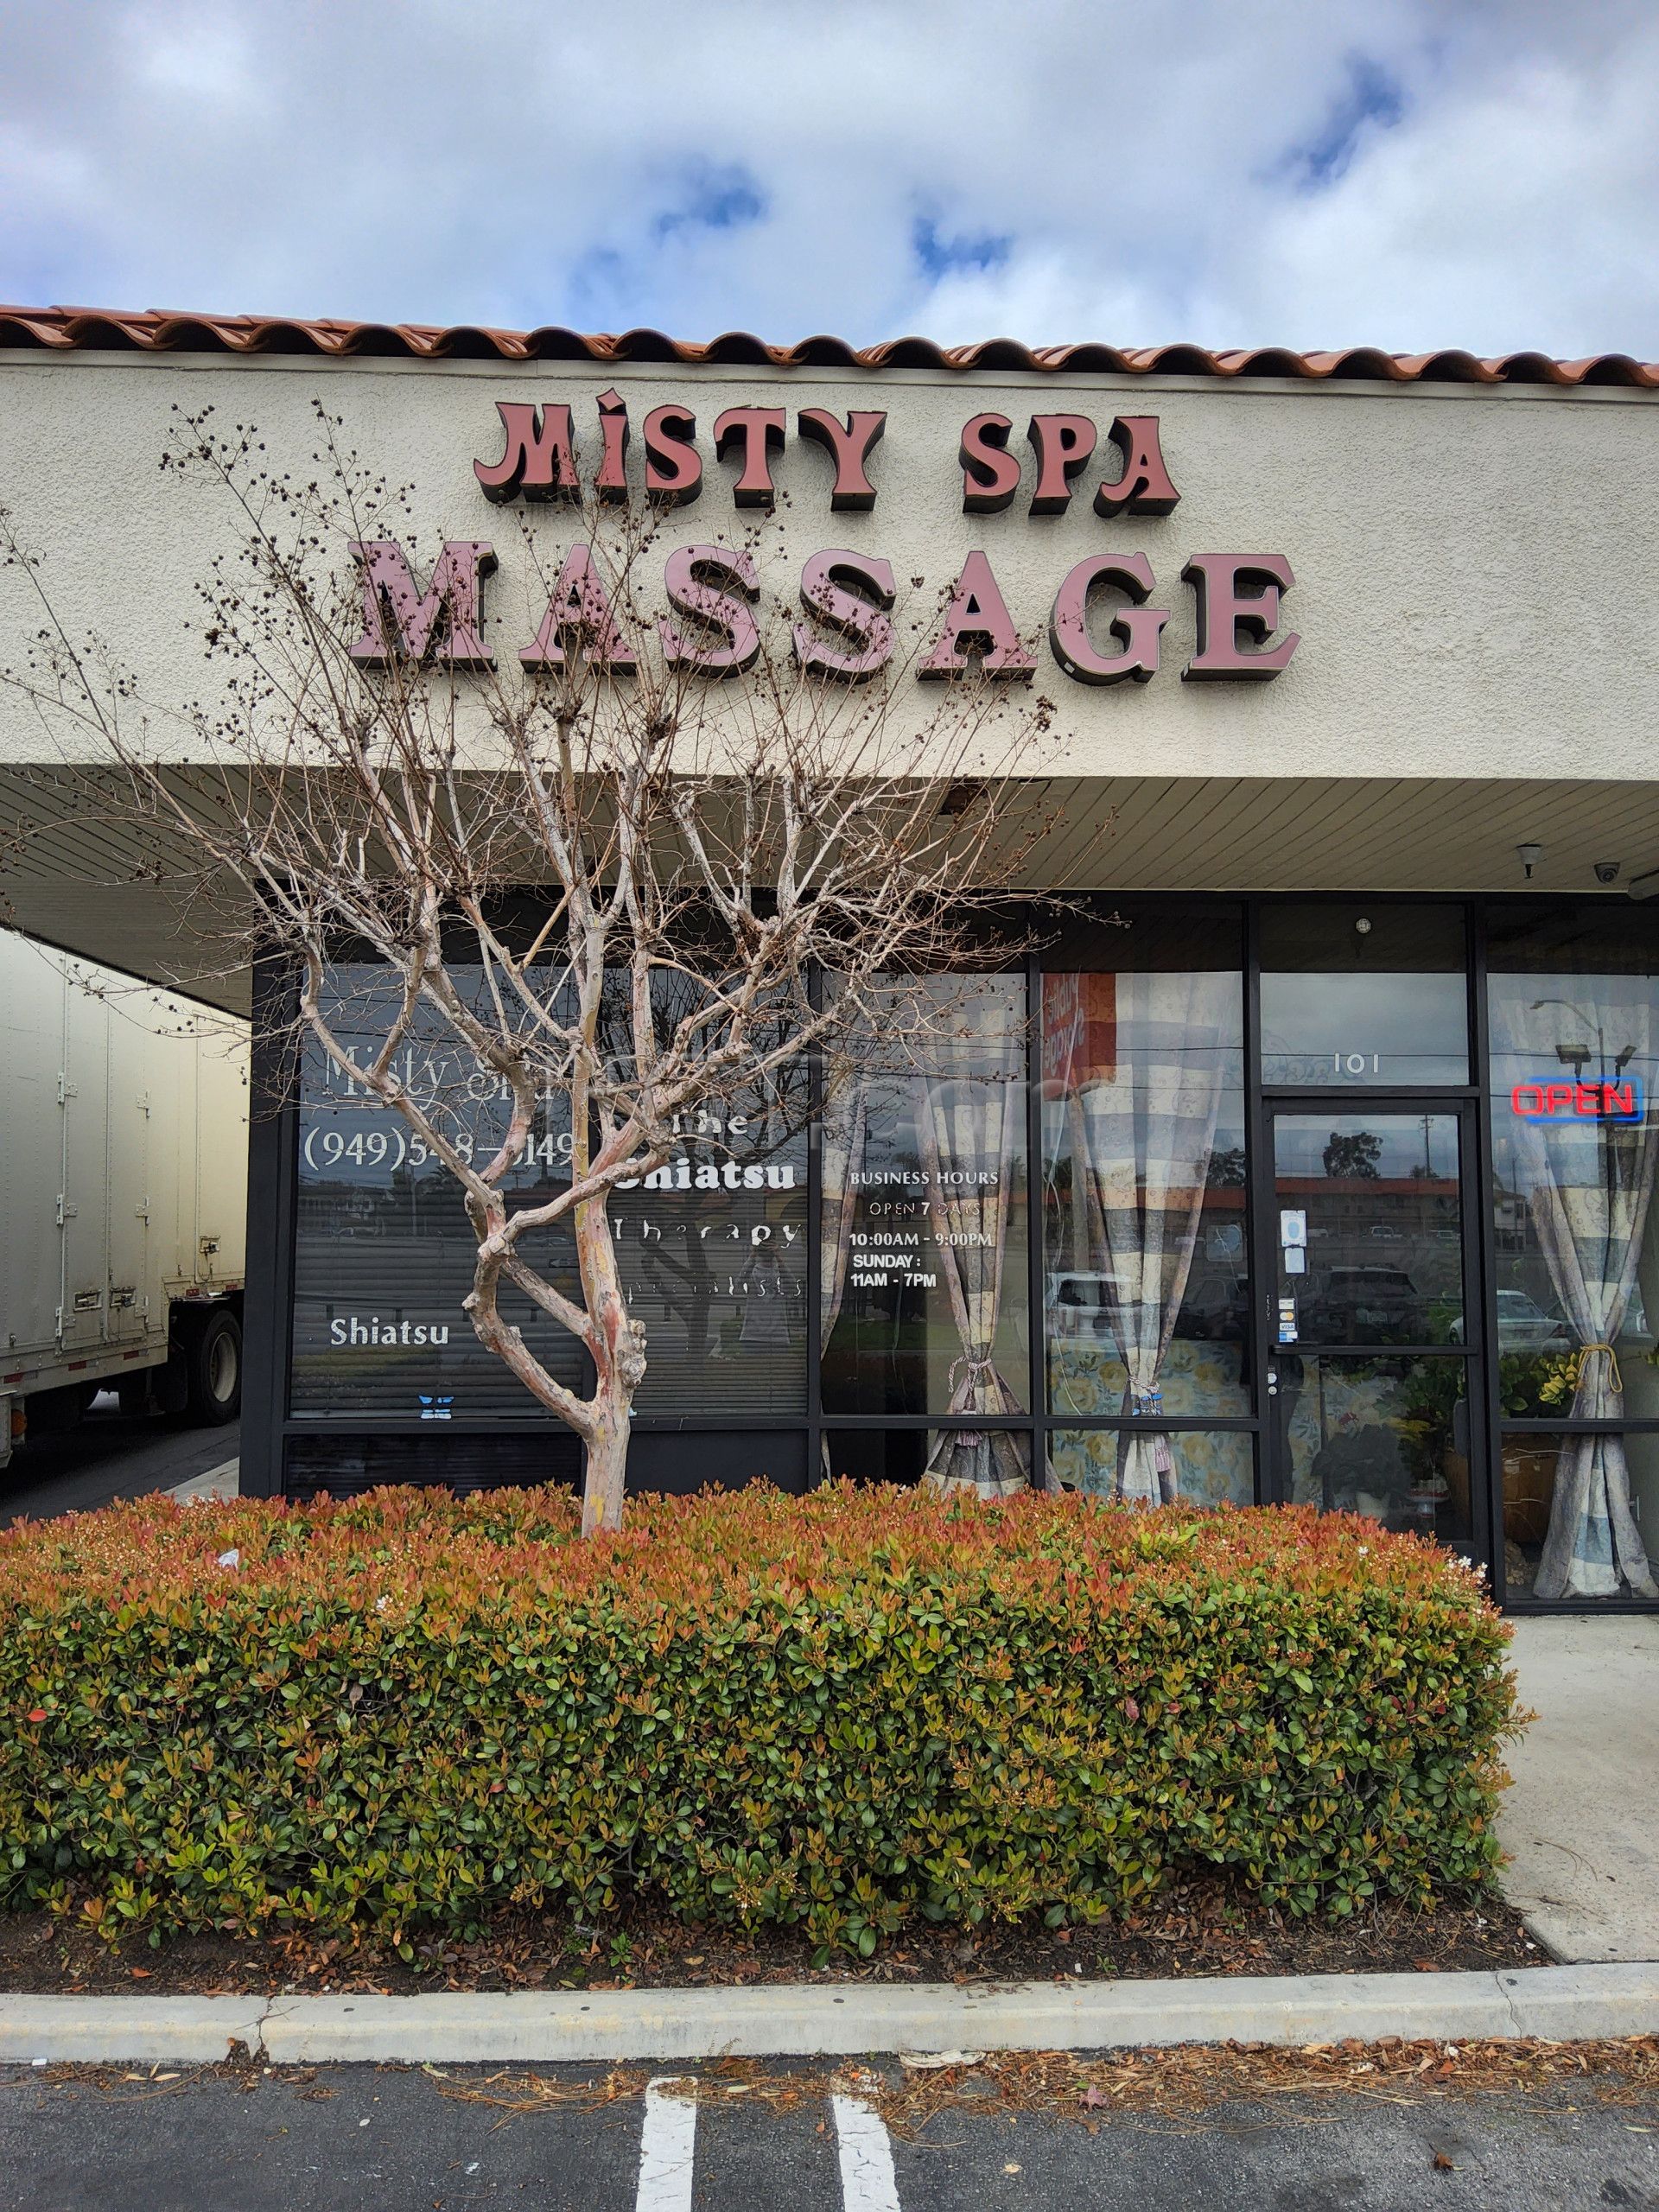 Costa Mesa, California Misty Spa